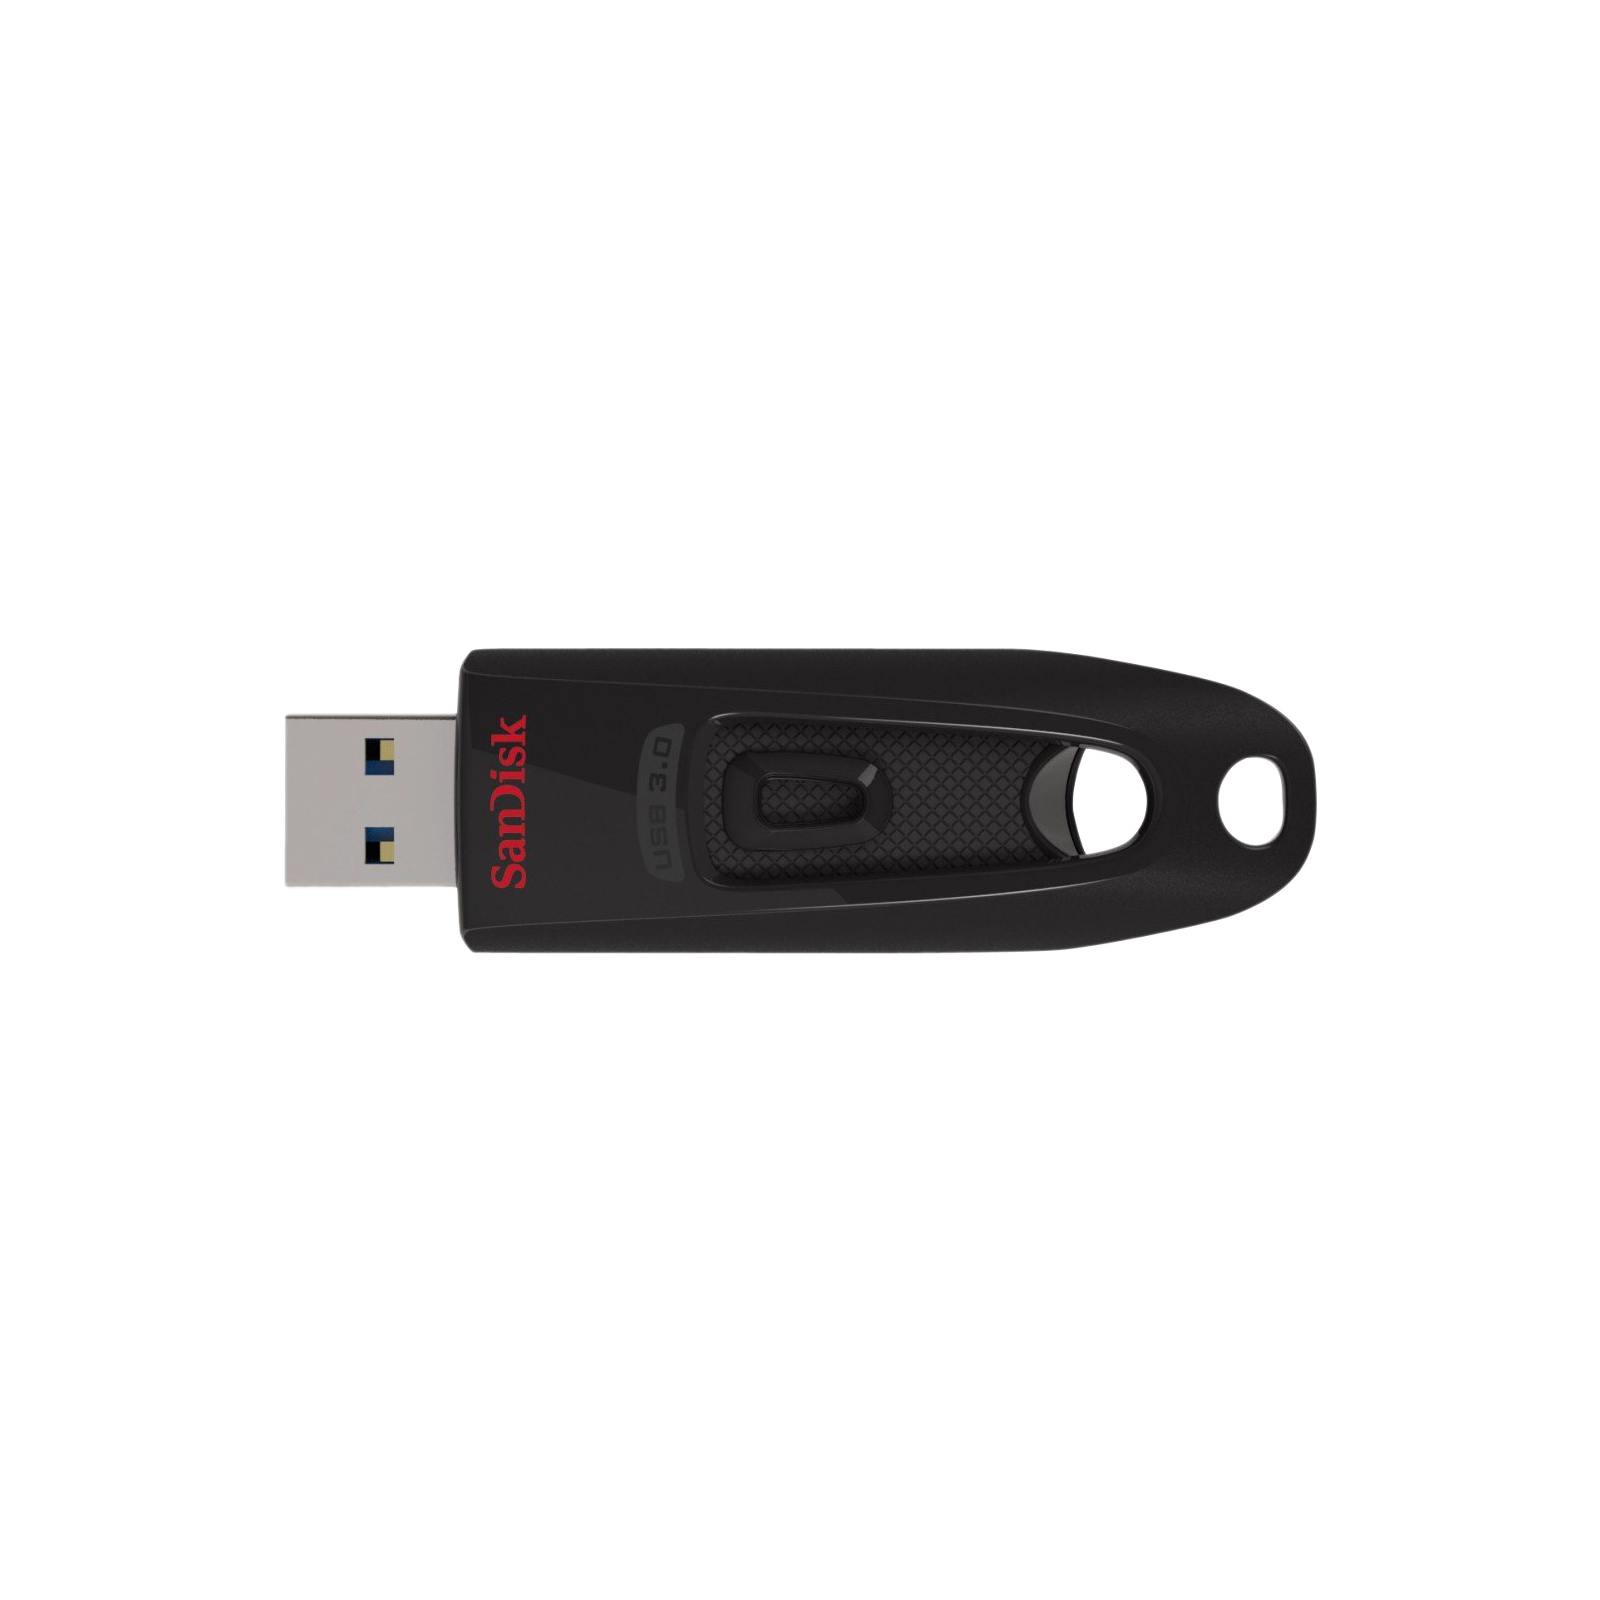 USB флеш накопитель SanDisk 128GB Ultra USB 3.0 (SDCZ48-128G-U46) изображение 4